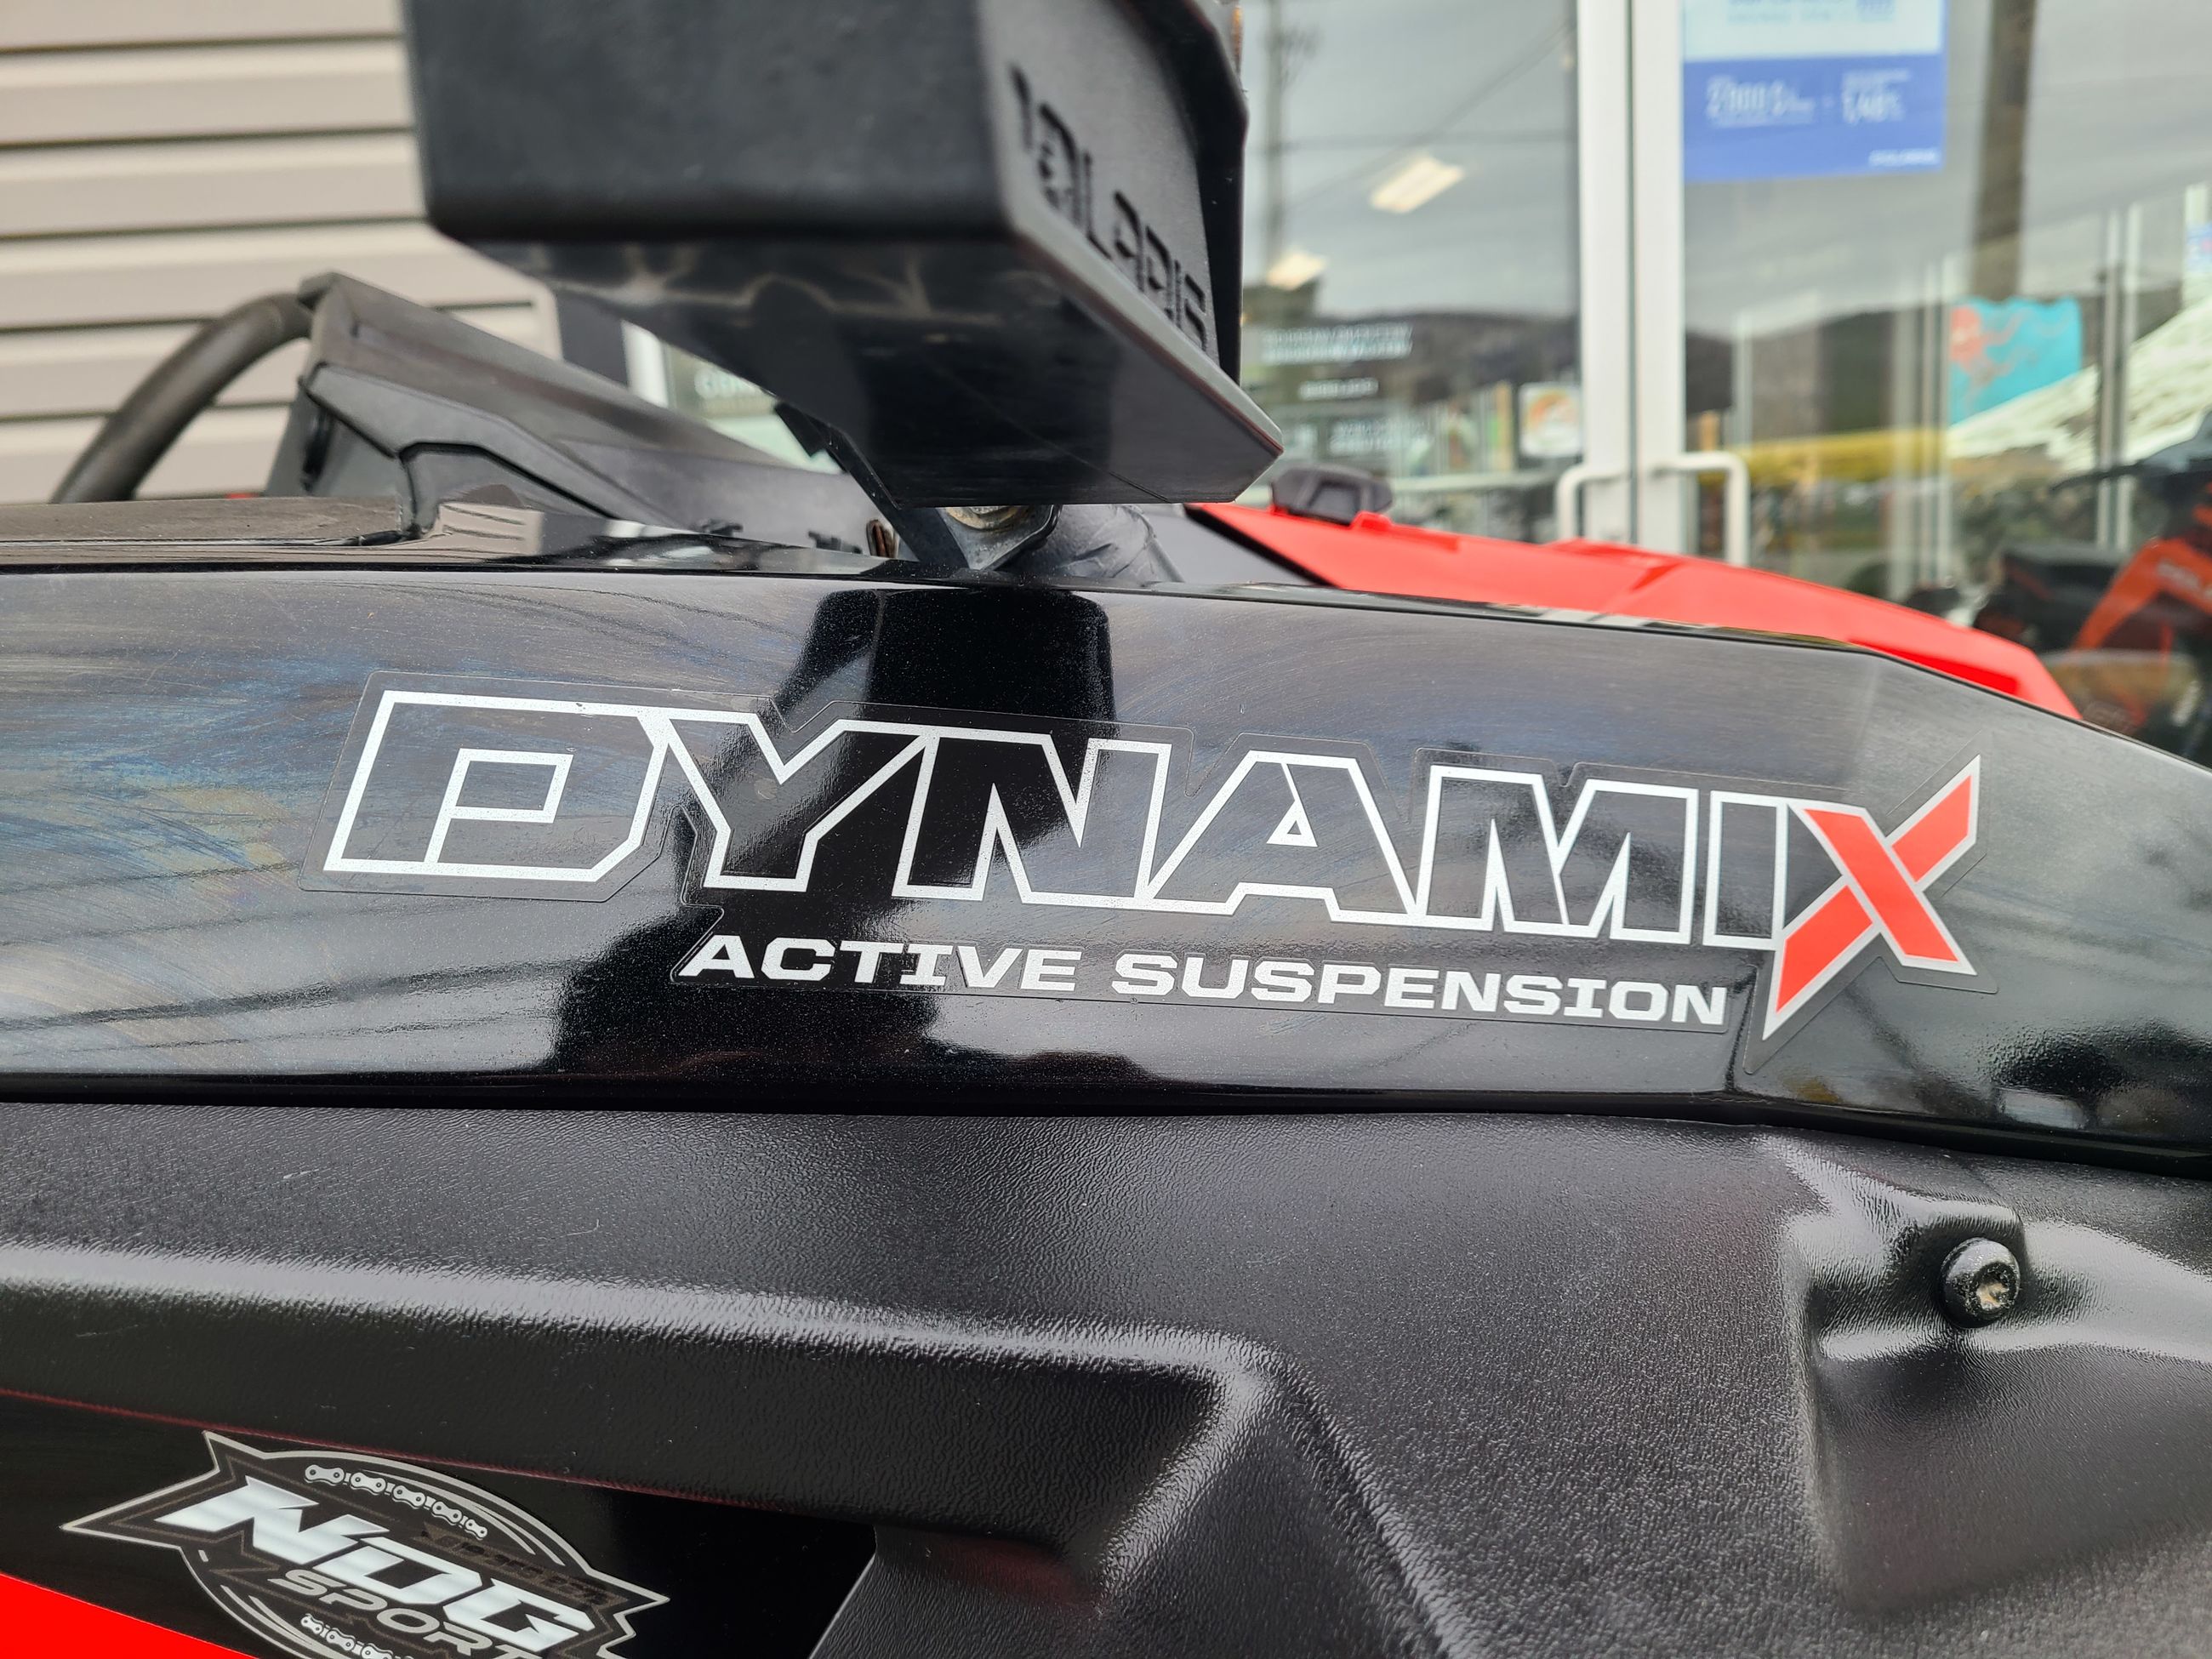 2018 Polaris RZR XP Turbo Dynamix active suspension